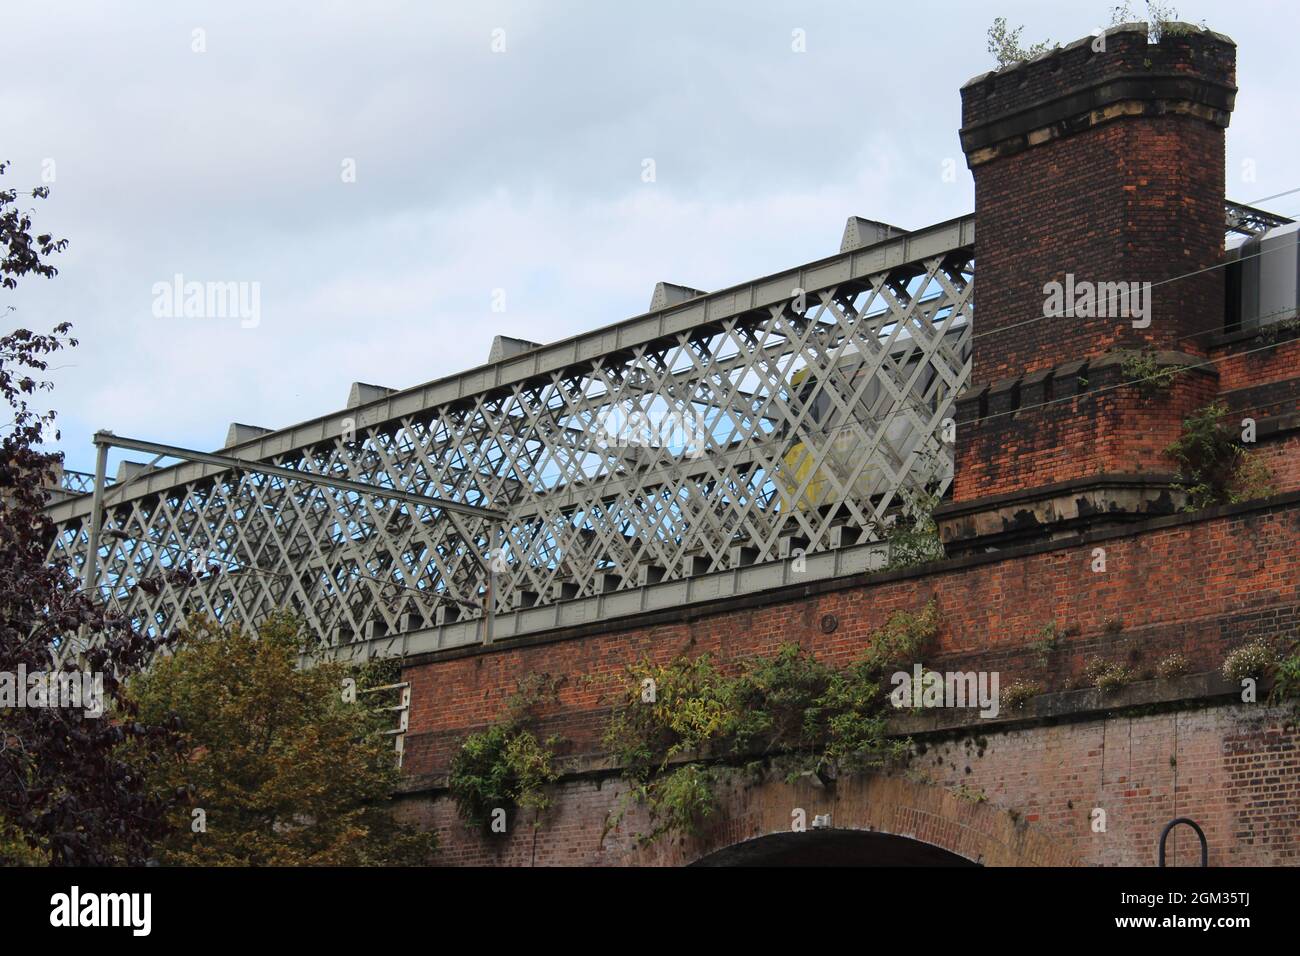 Metrolink tram on a bridge in Castlefield, Manchester Stock Photo